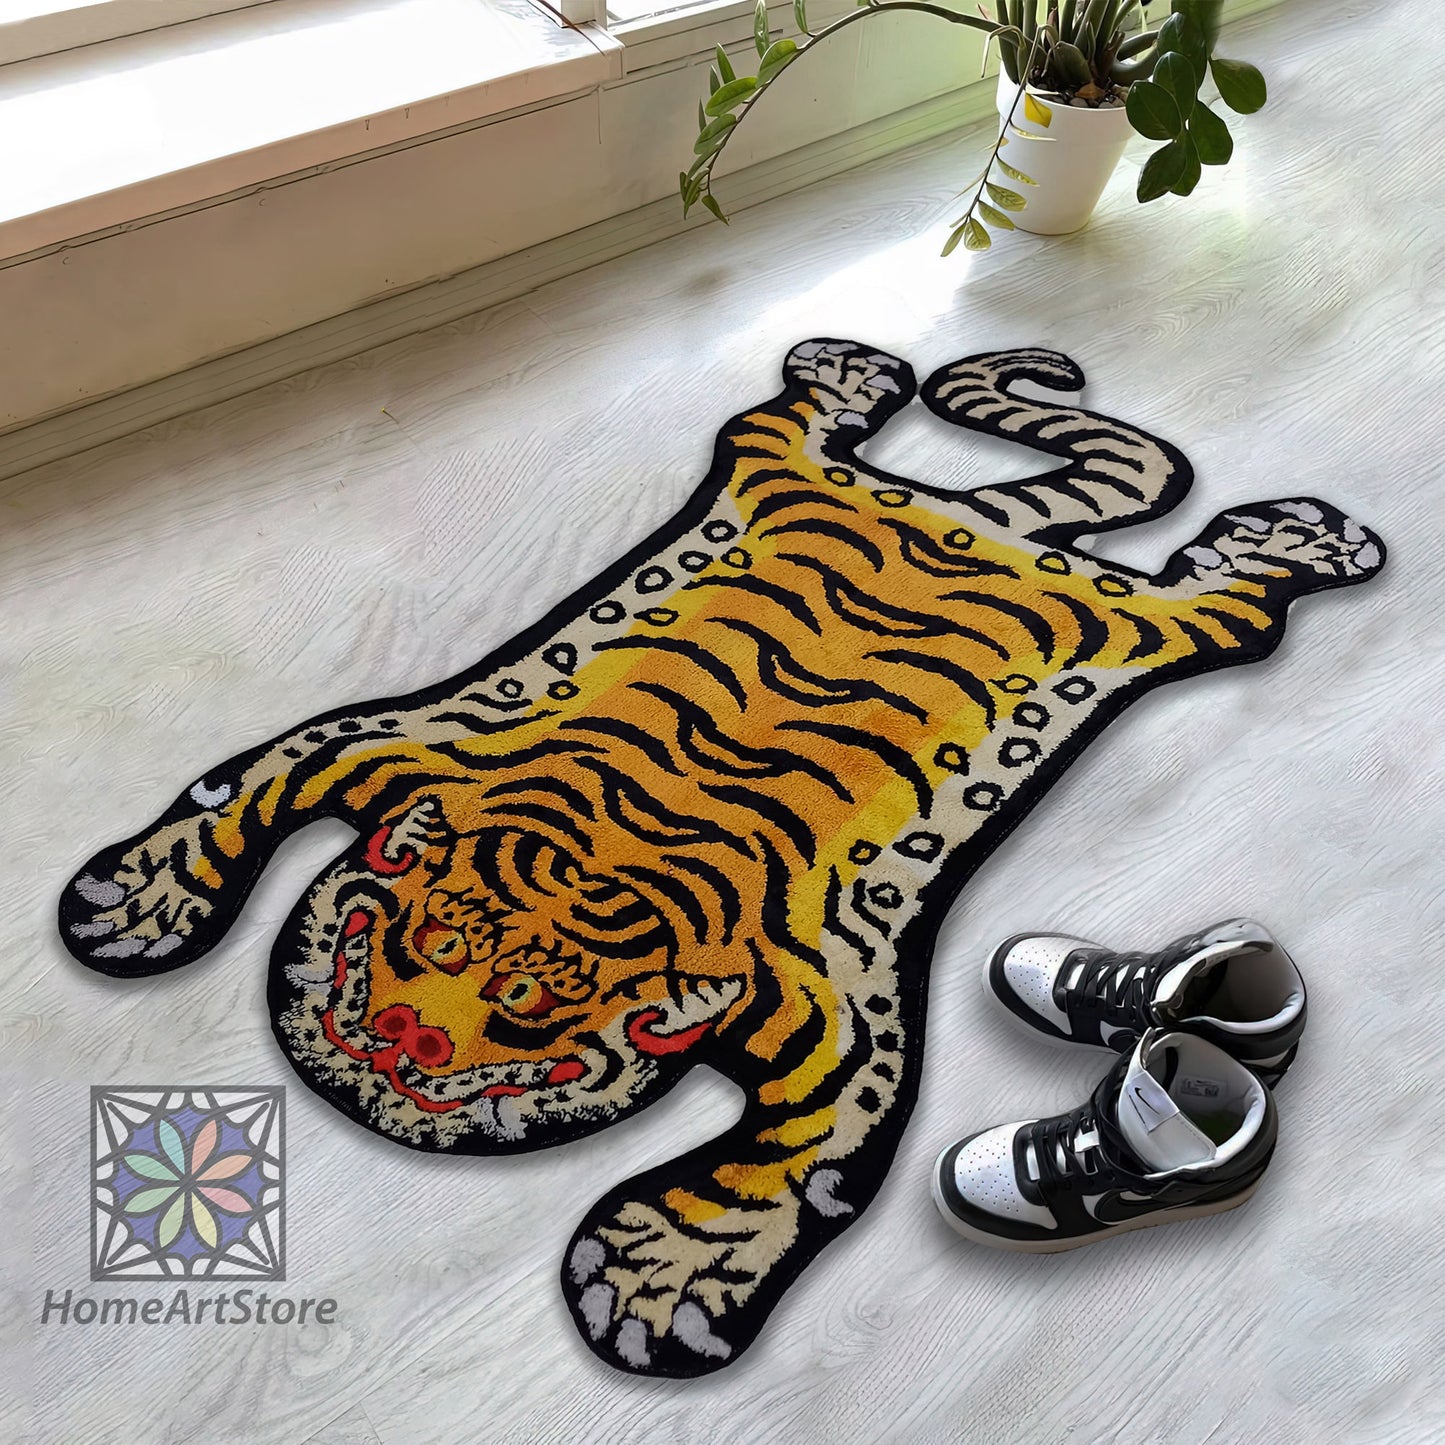 Tibetan Tiger Carpet - Traditional Art for Decorative Home Decoration